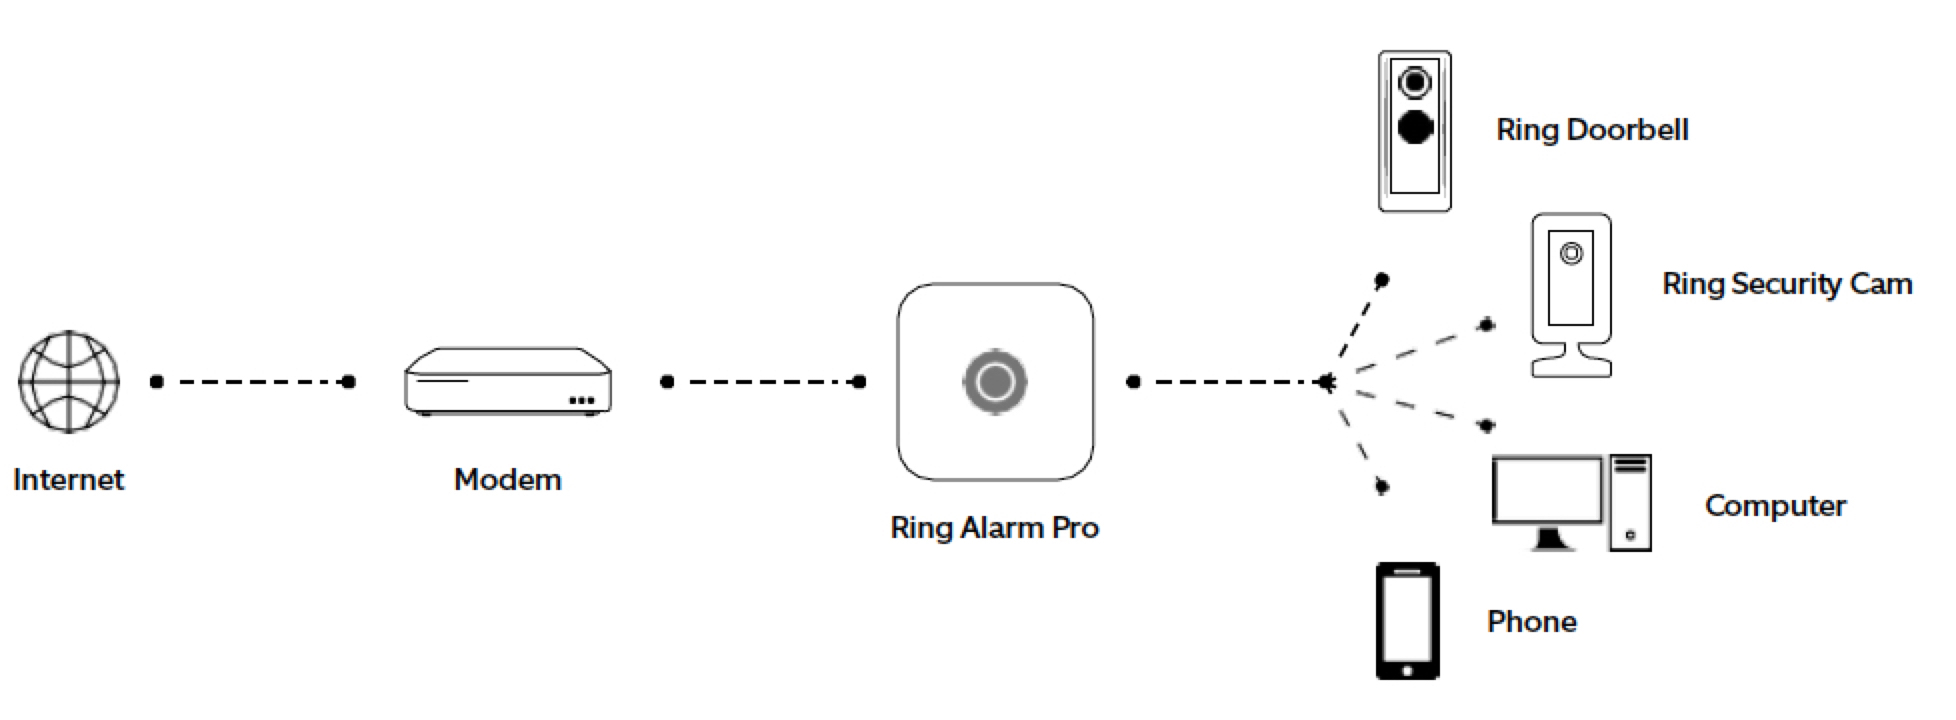 alarm_pro_router_setup.jpg